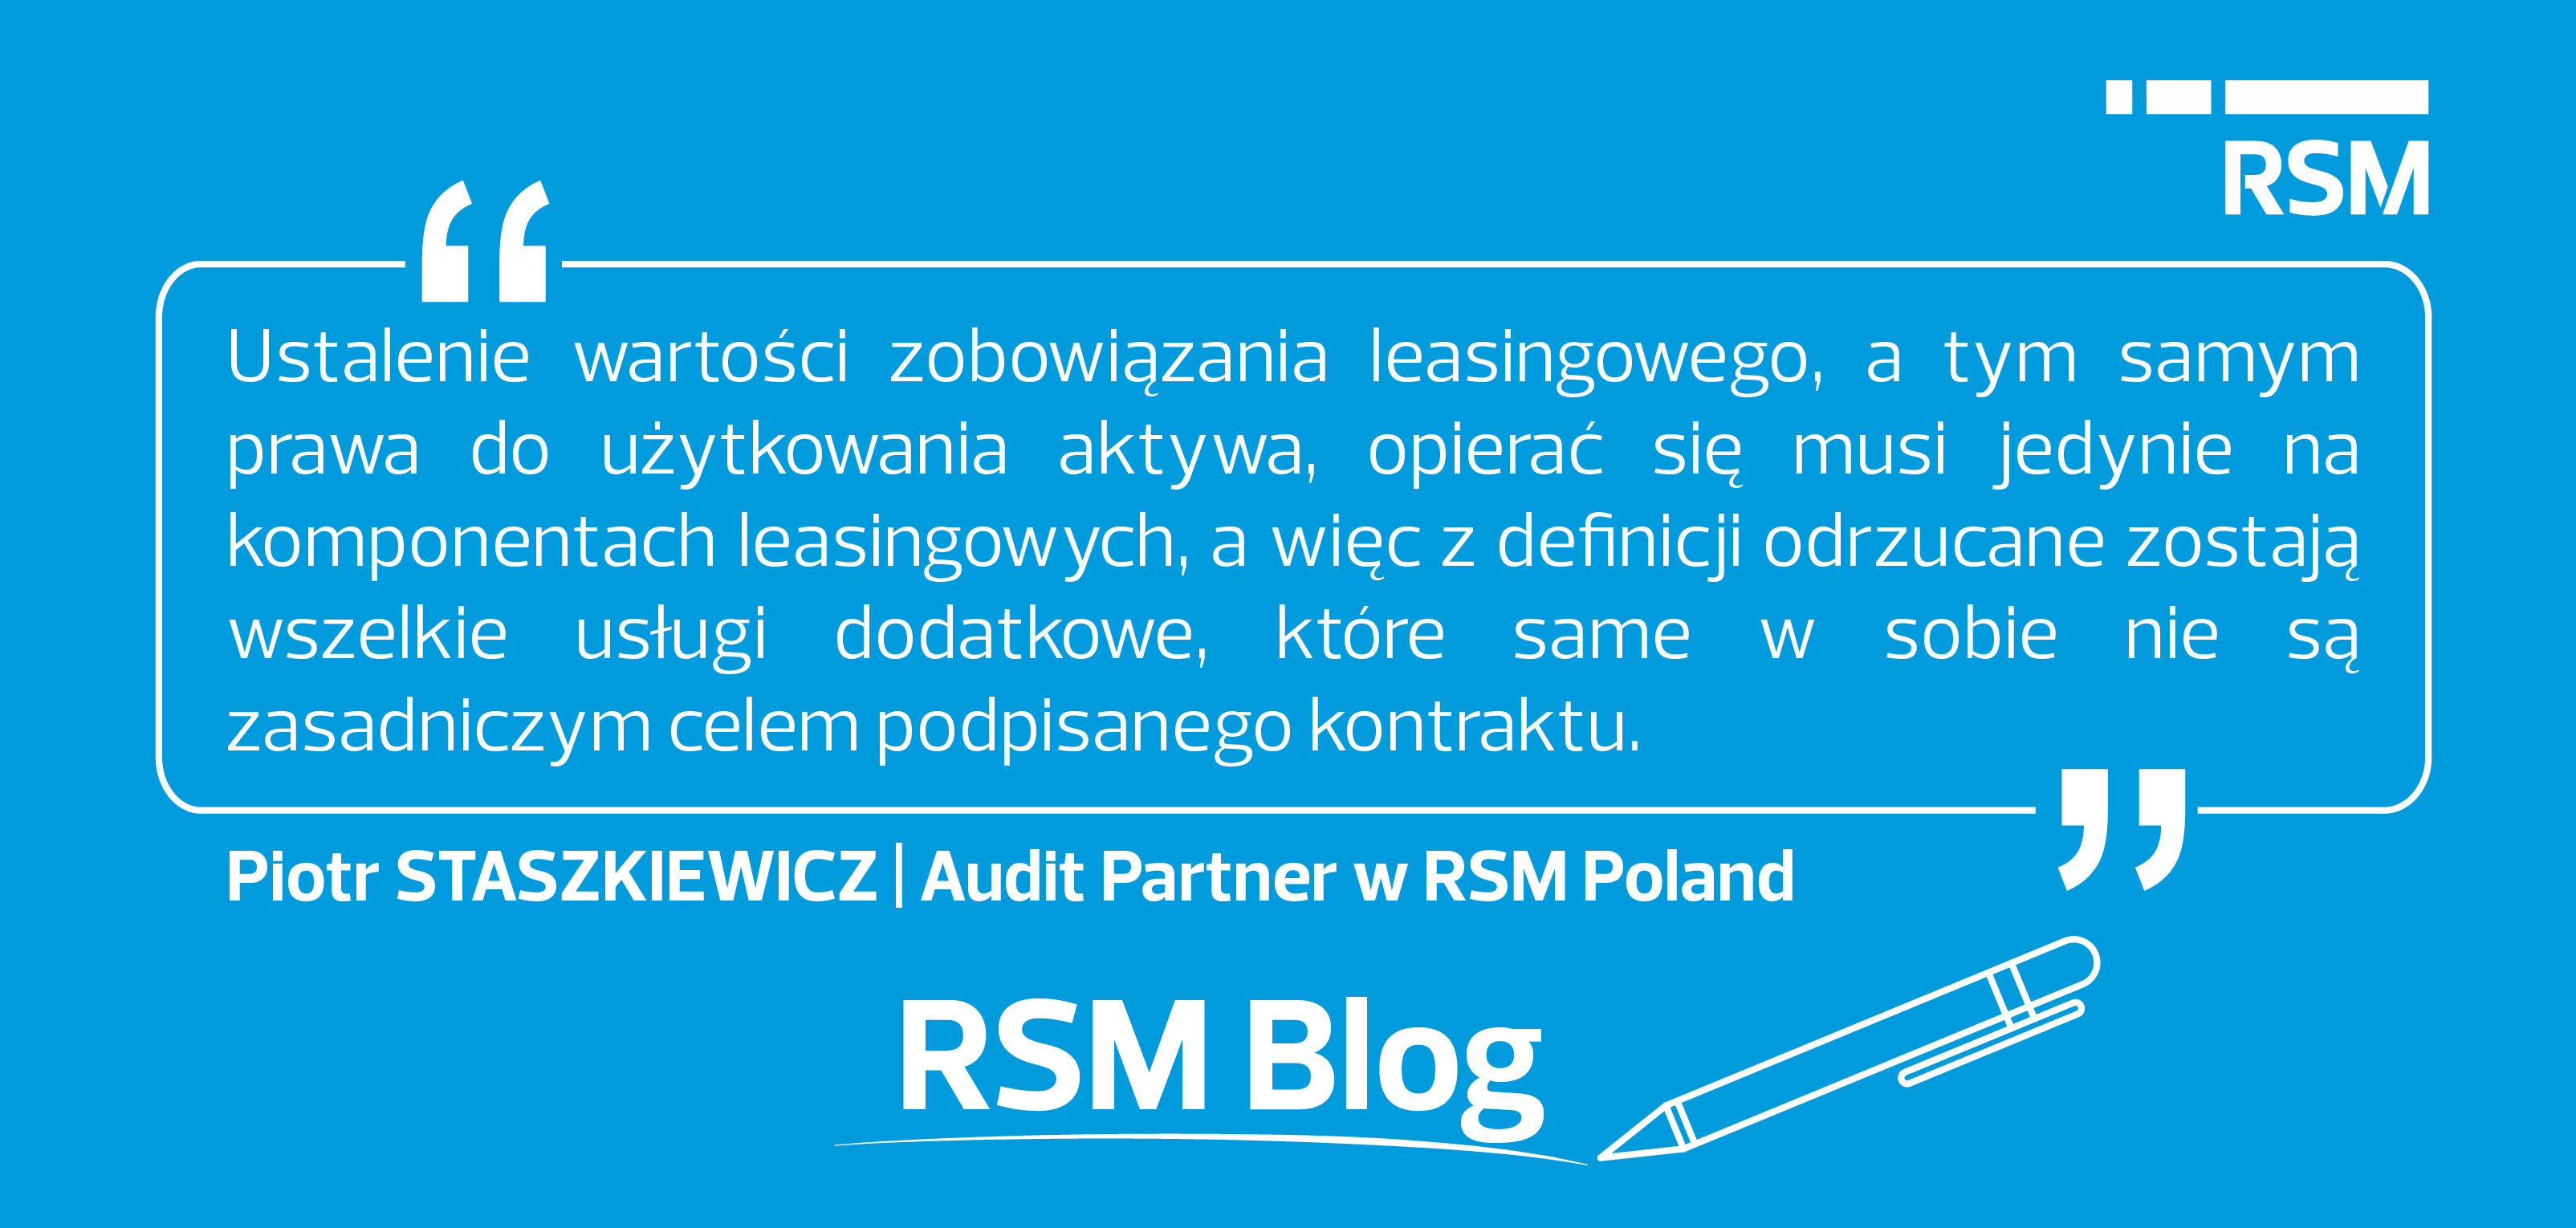 RSM Poland